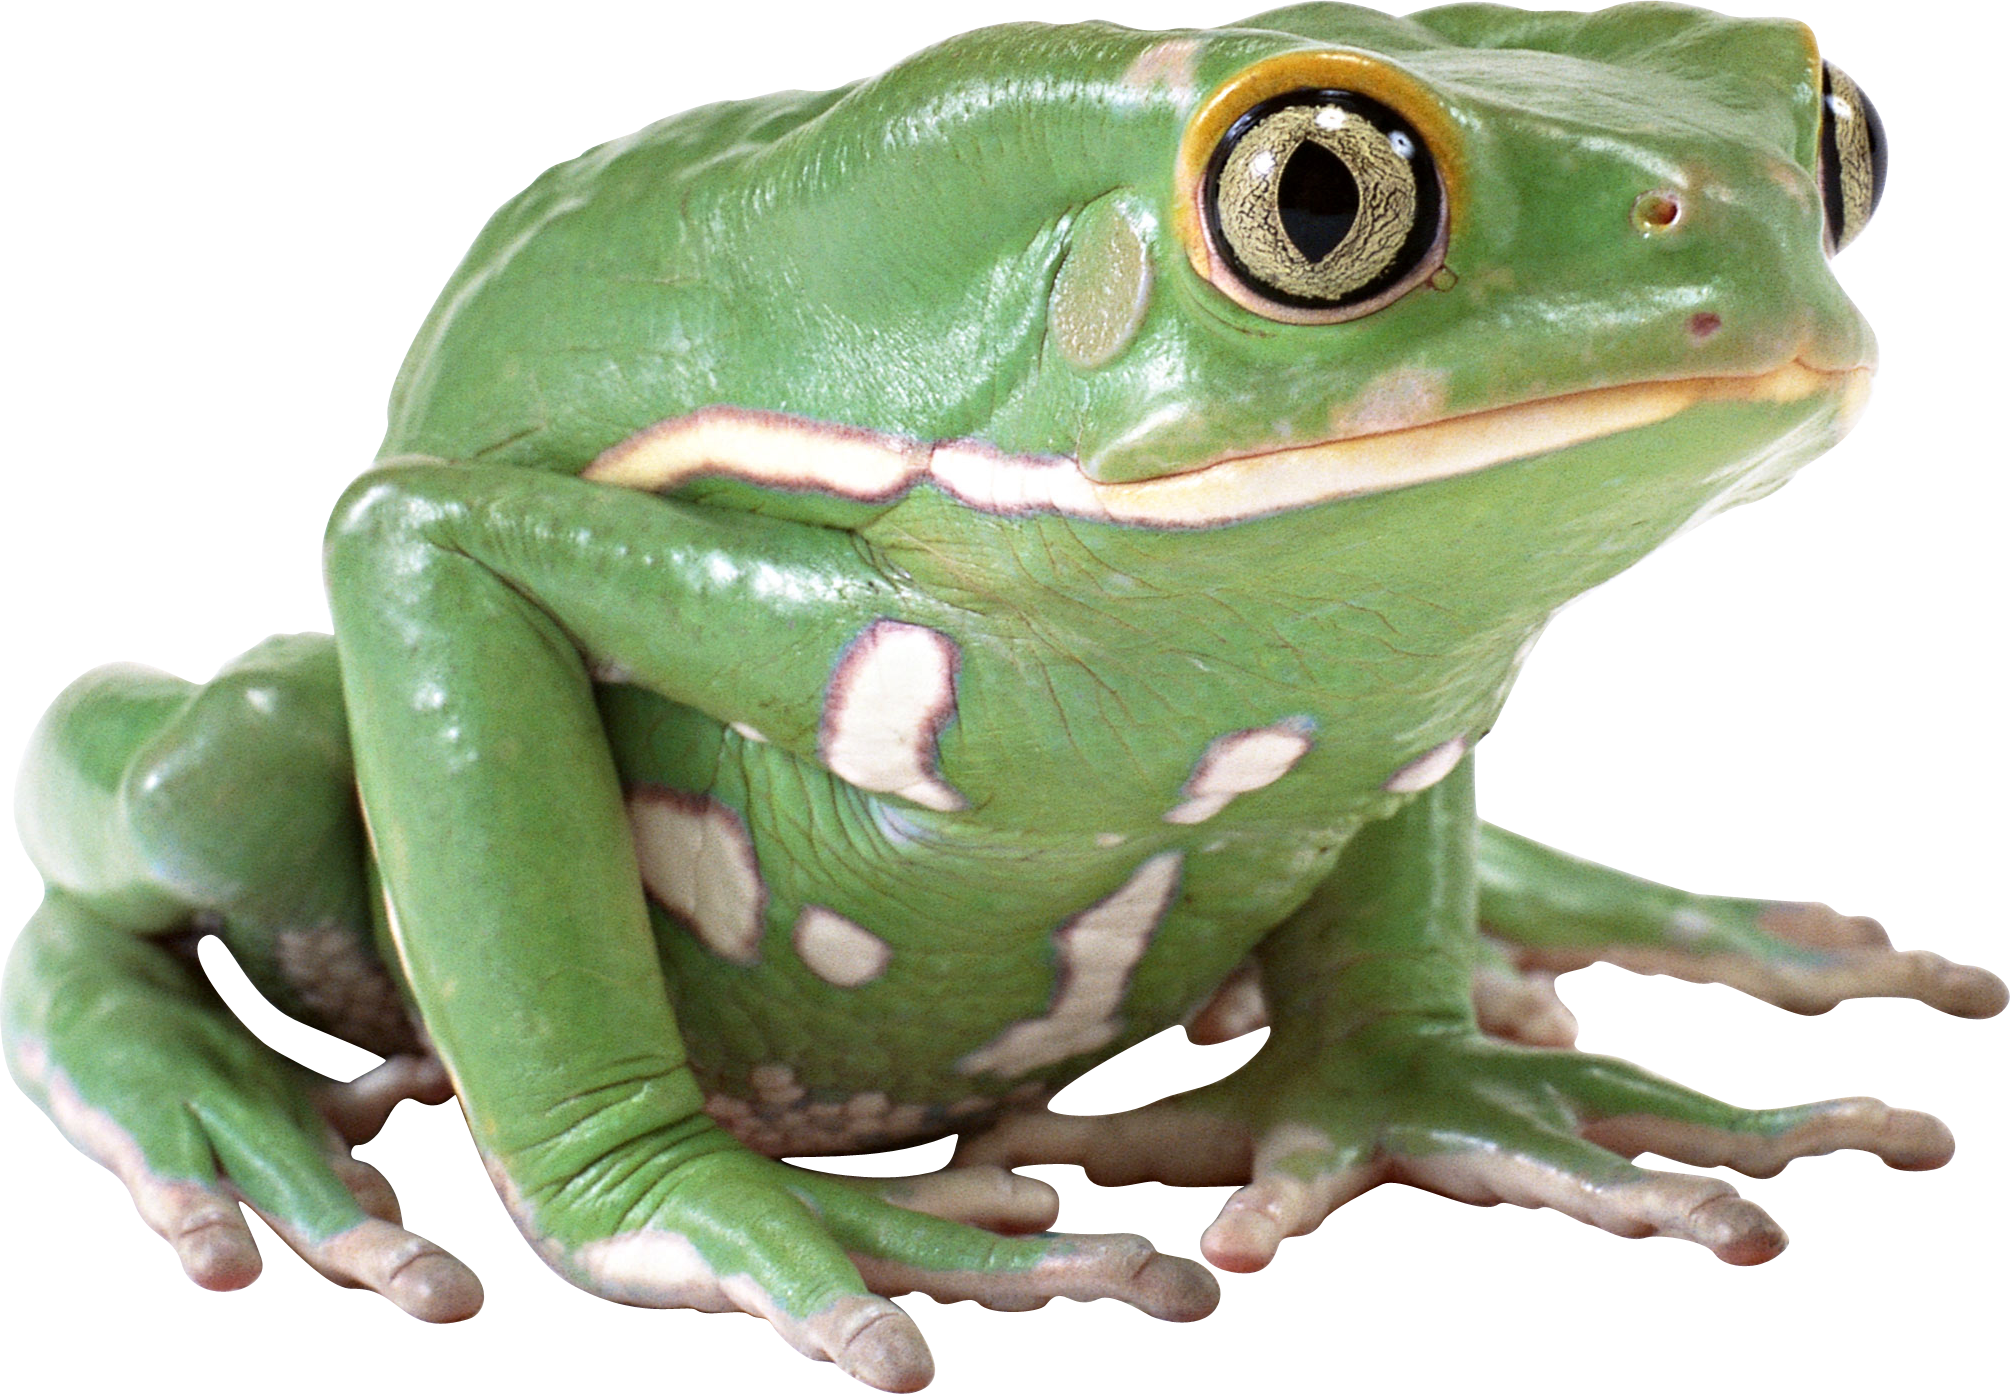 Amphibian Frog PNG Image High Quality PNG Image